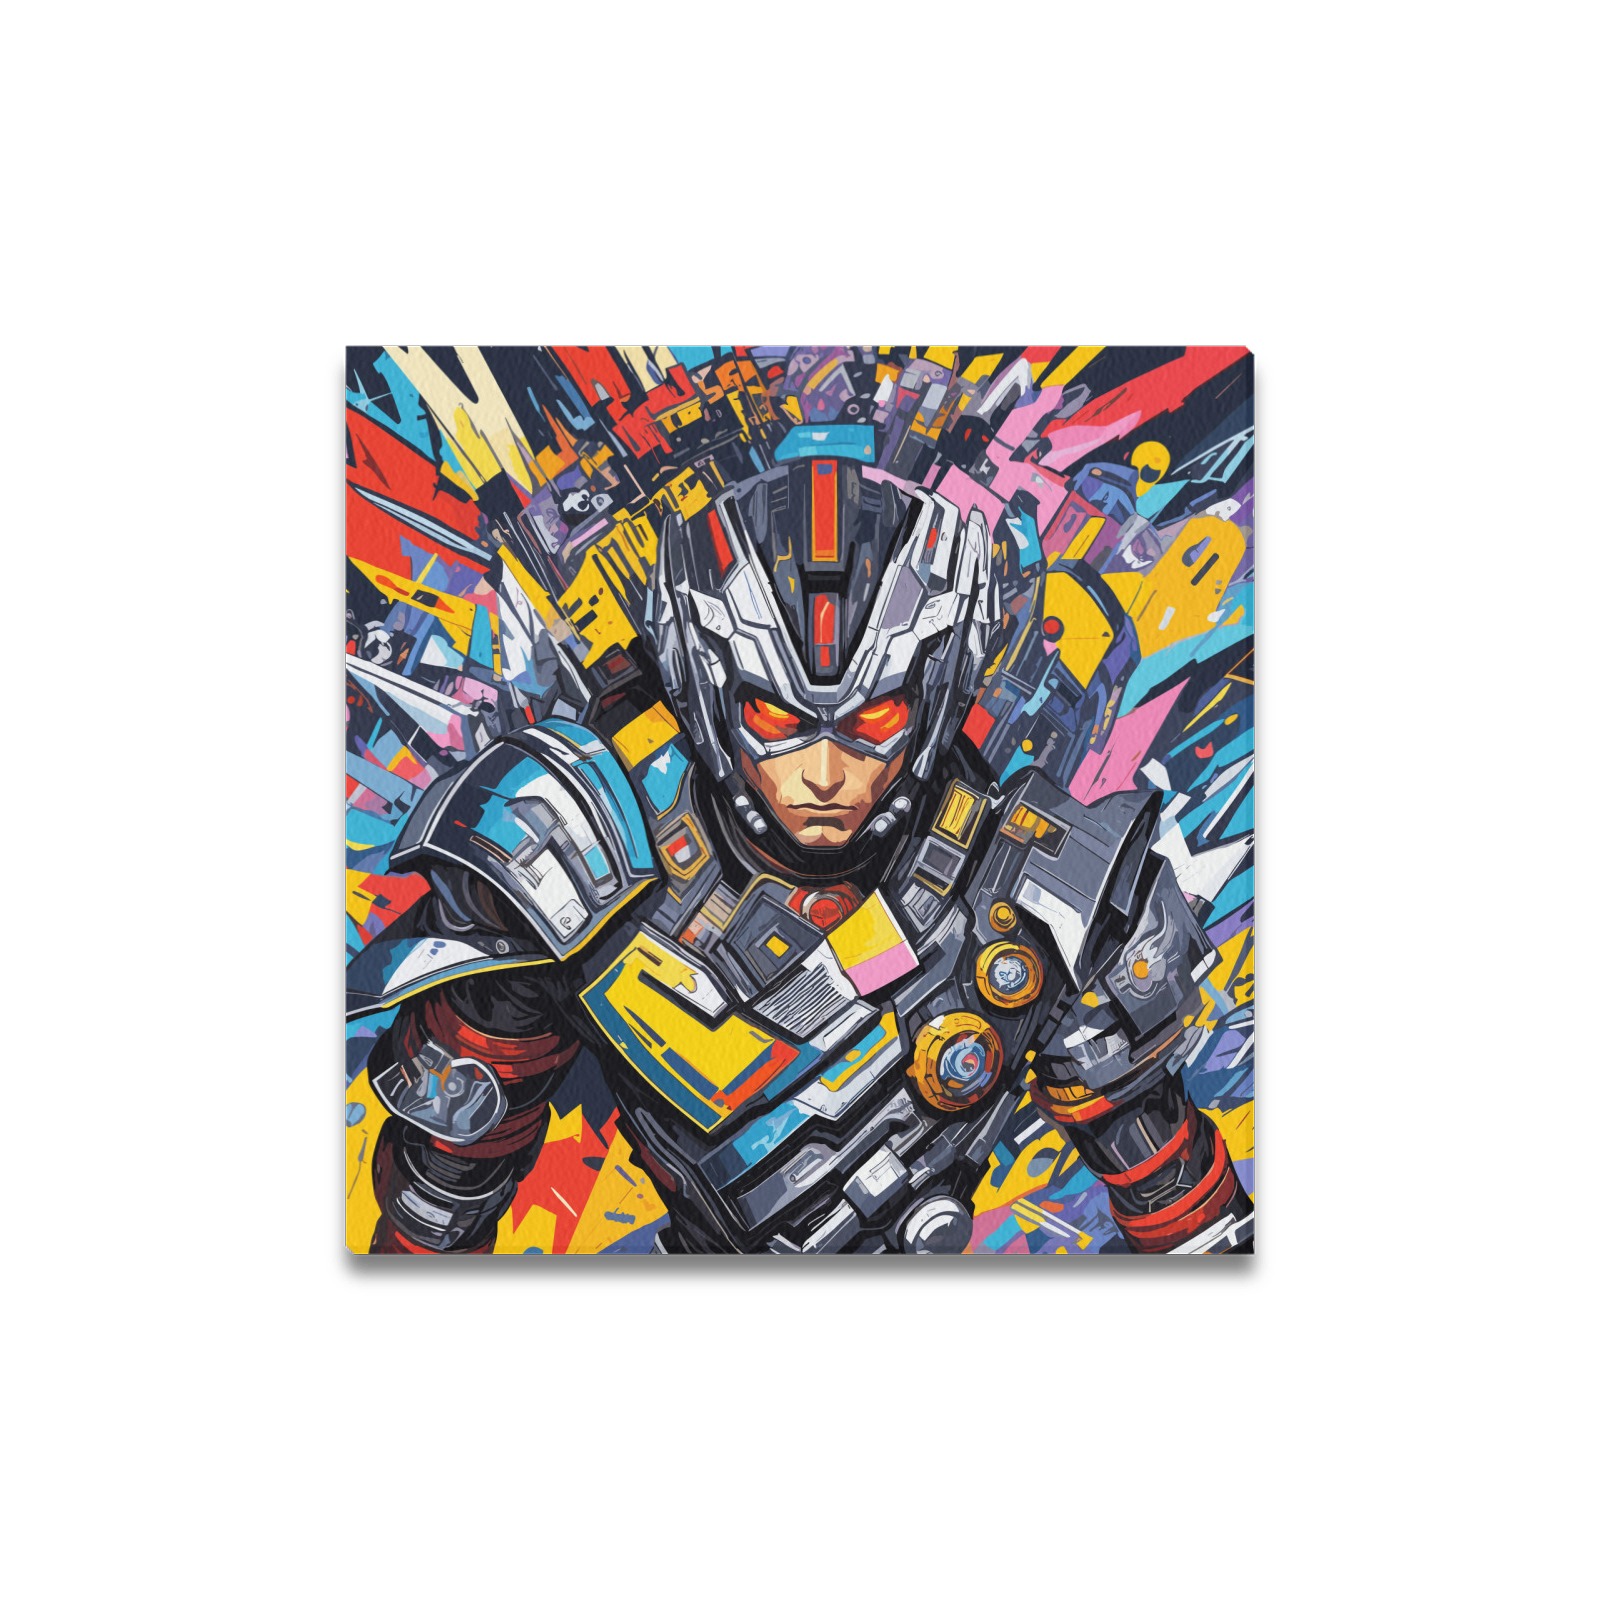 Striking abstract art of a futuristic cyborg man. Upgraded Canvas Print 16"x16"